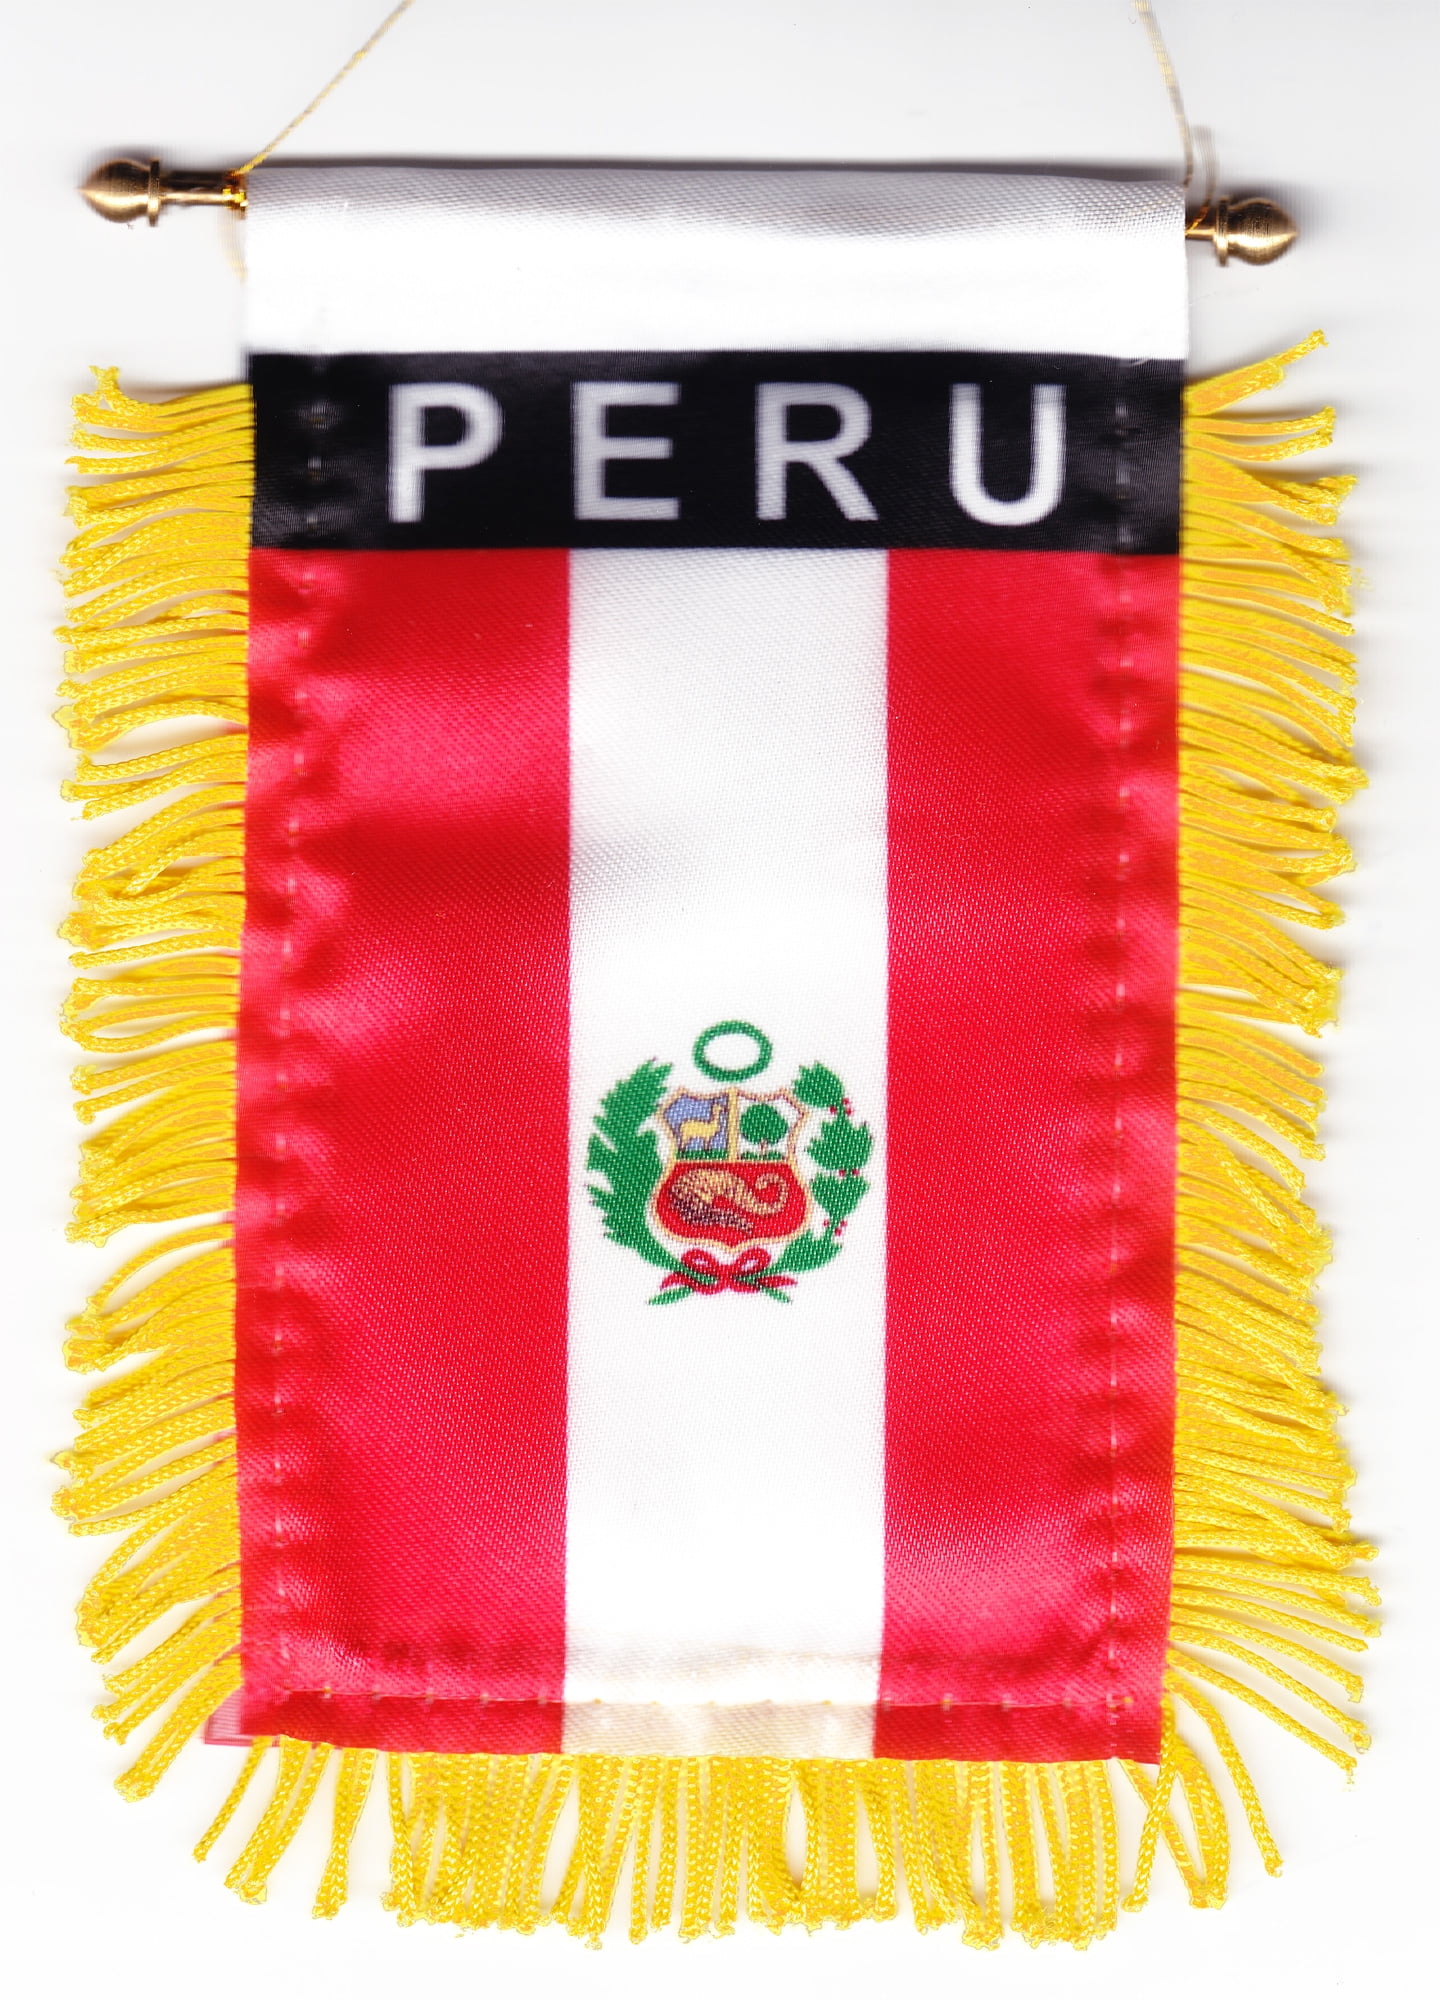 "PERU" FLAG MINI BANNER CAR WINDOW MIRROR 